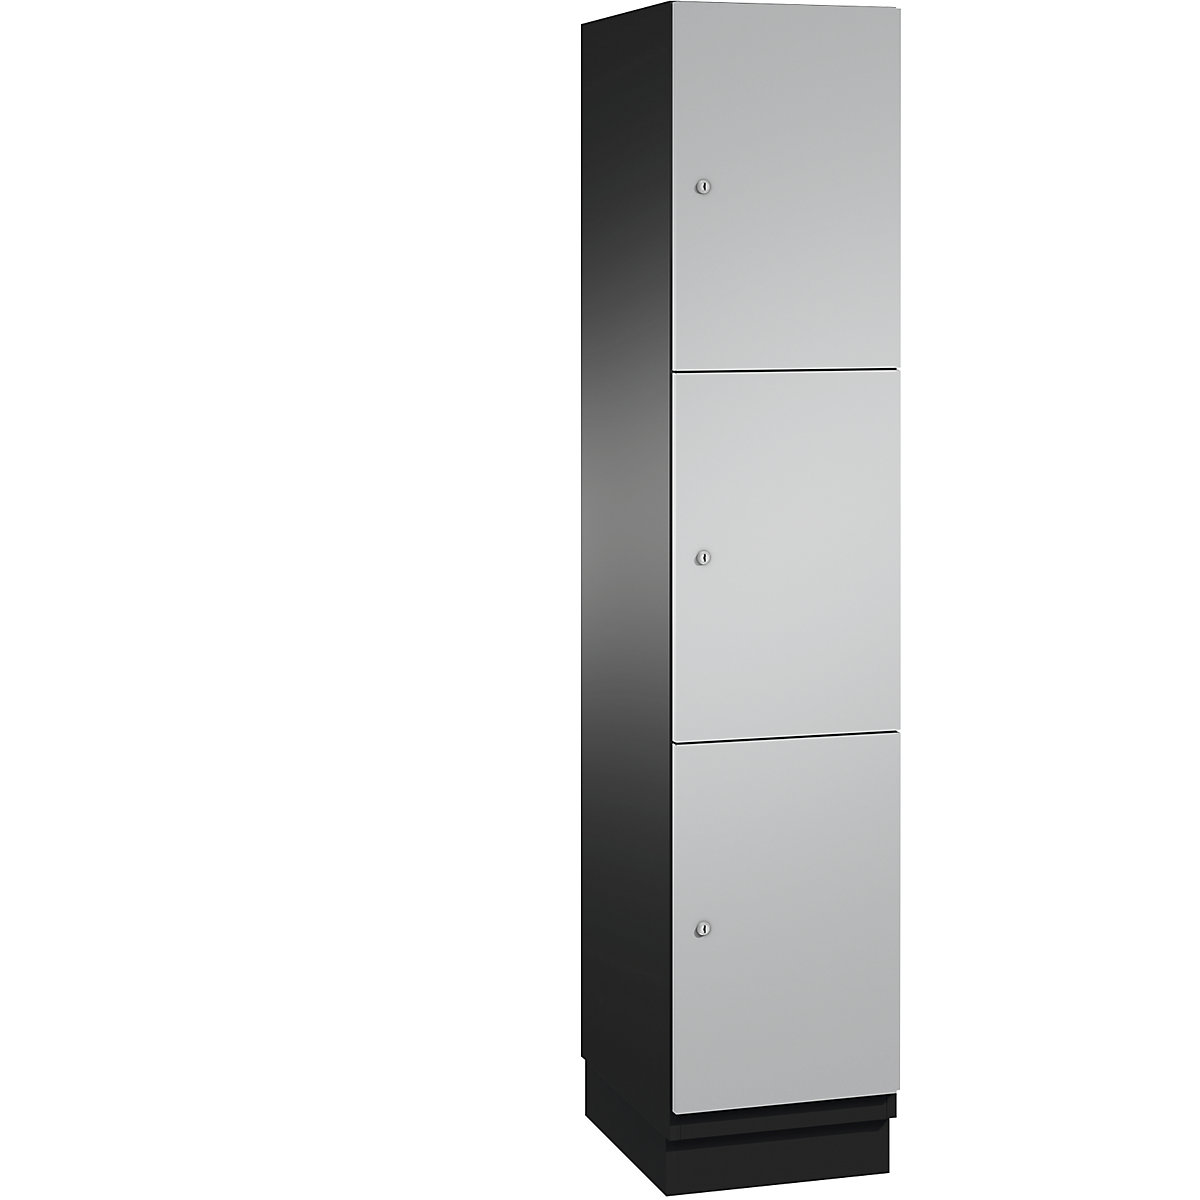 CAMBIO compartment locker with sheet steel doors – C+P, 3 compartments, width 400 mm, body black grey / door white aluminium-10